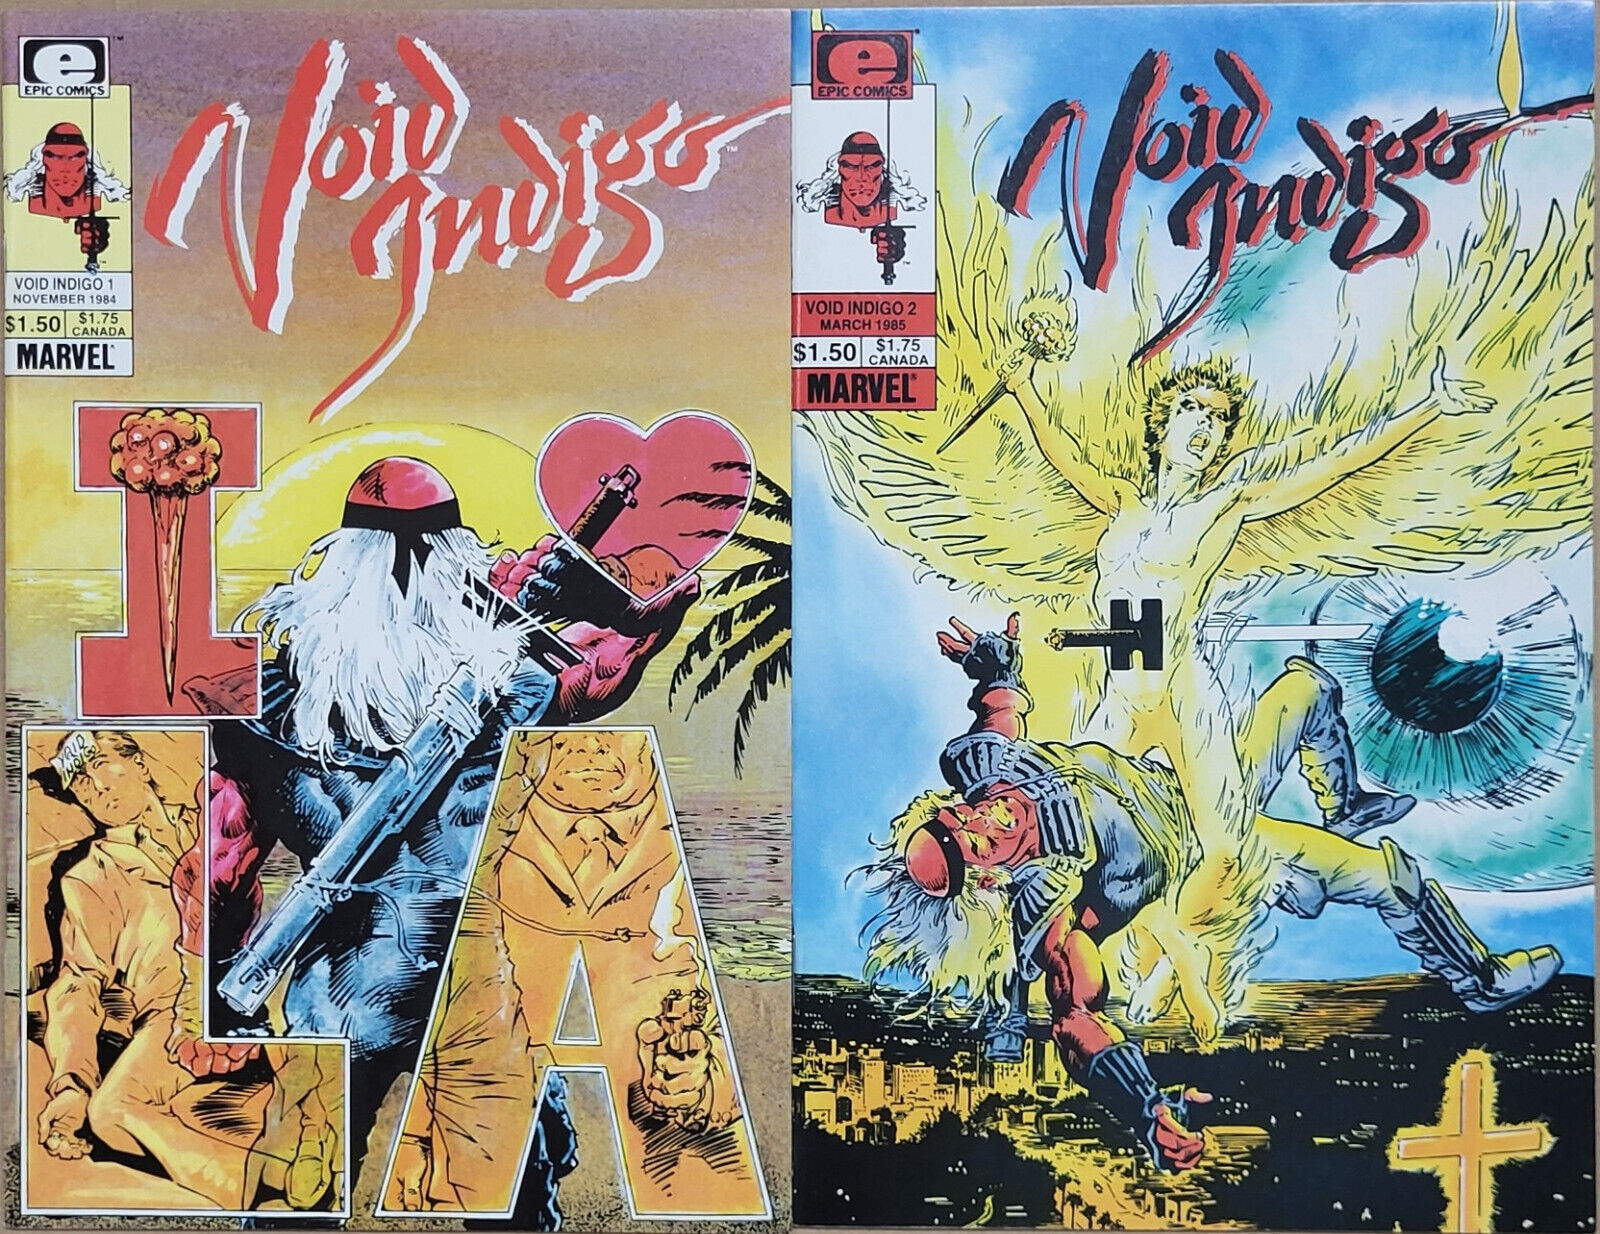 Lot of 2 Comics: Void Indigo #1, 2 by Epic/Marvel 1984-85